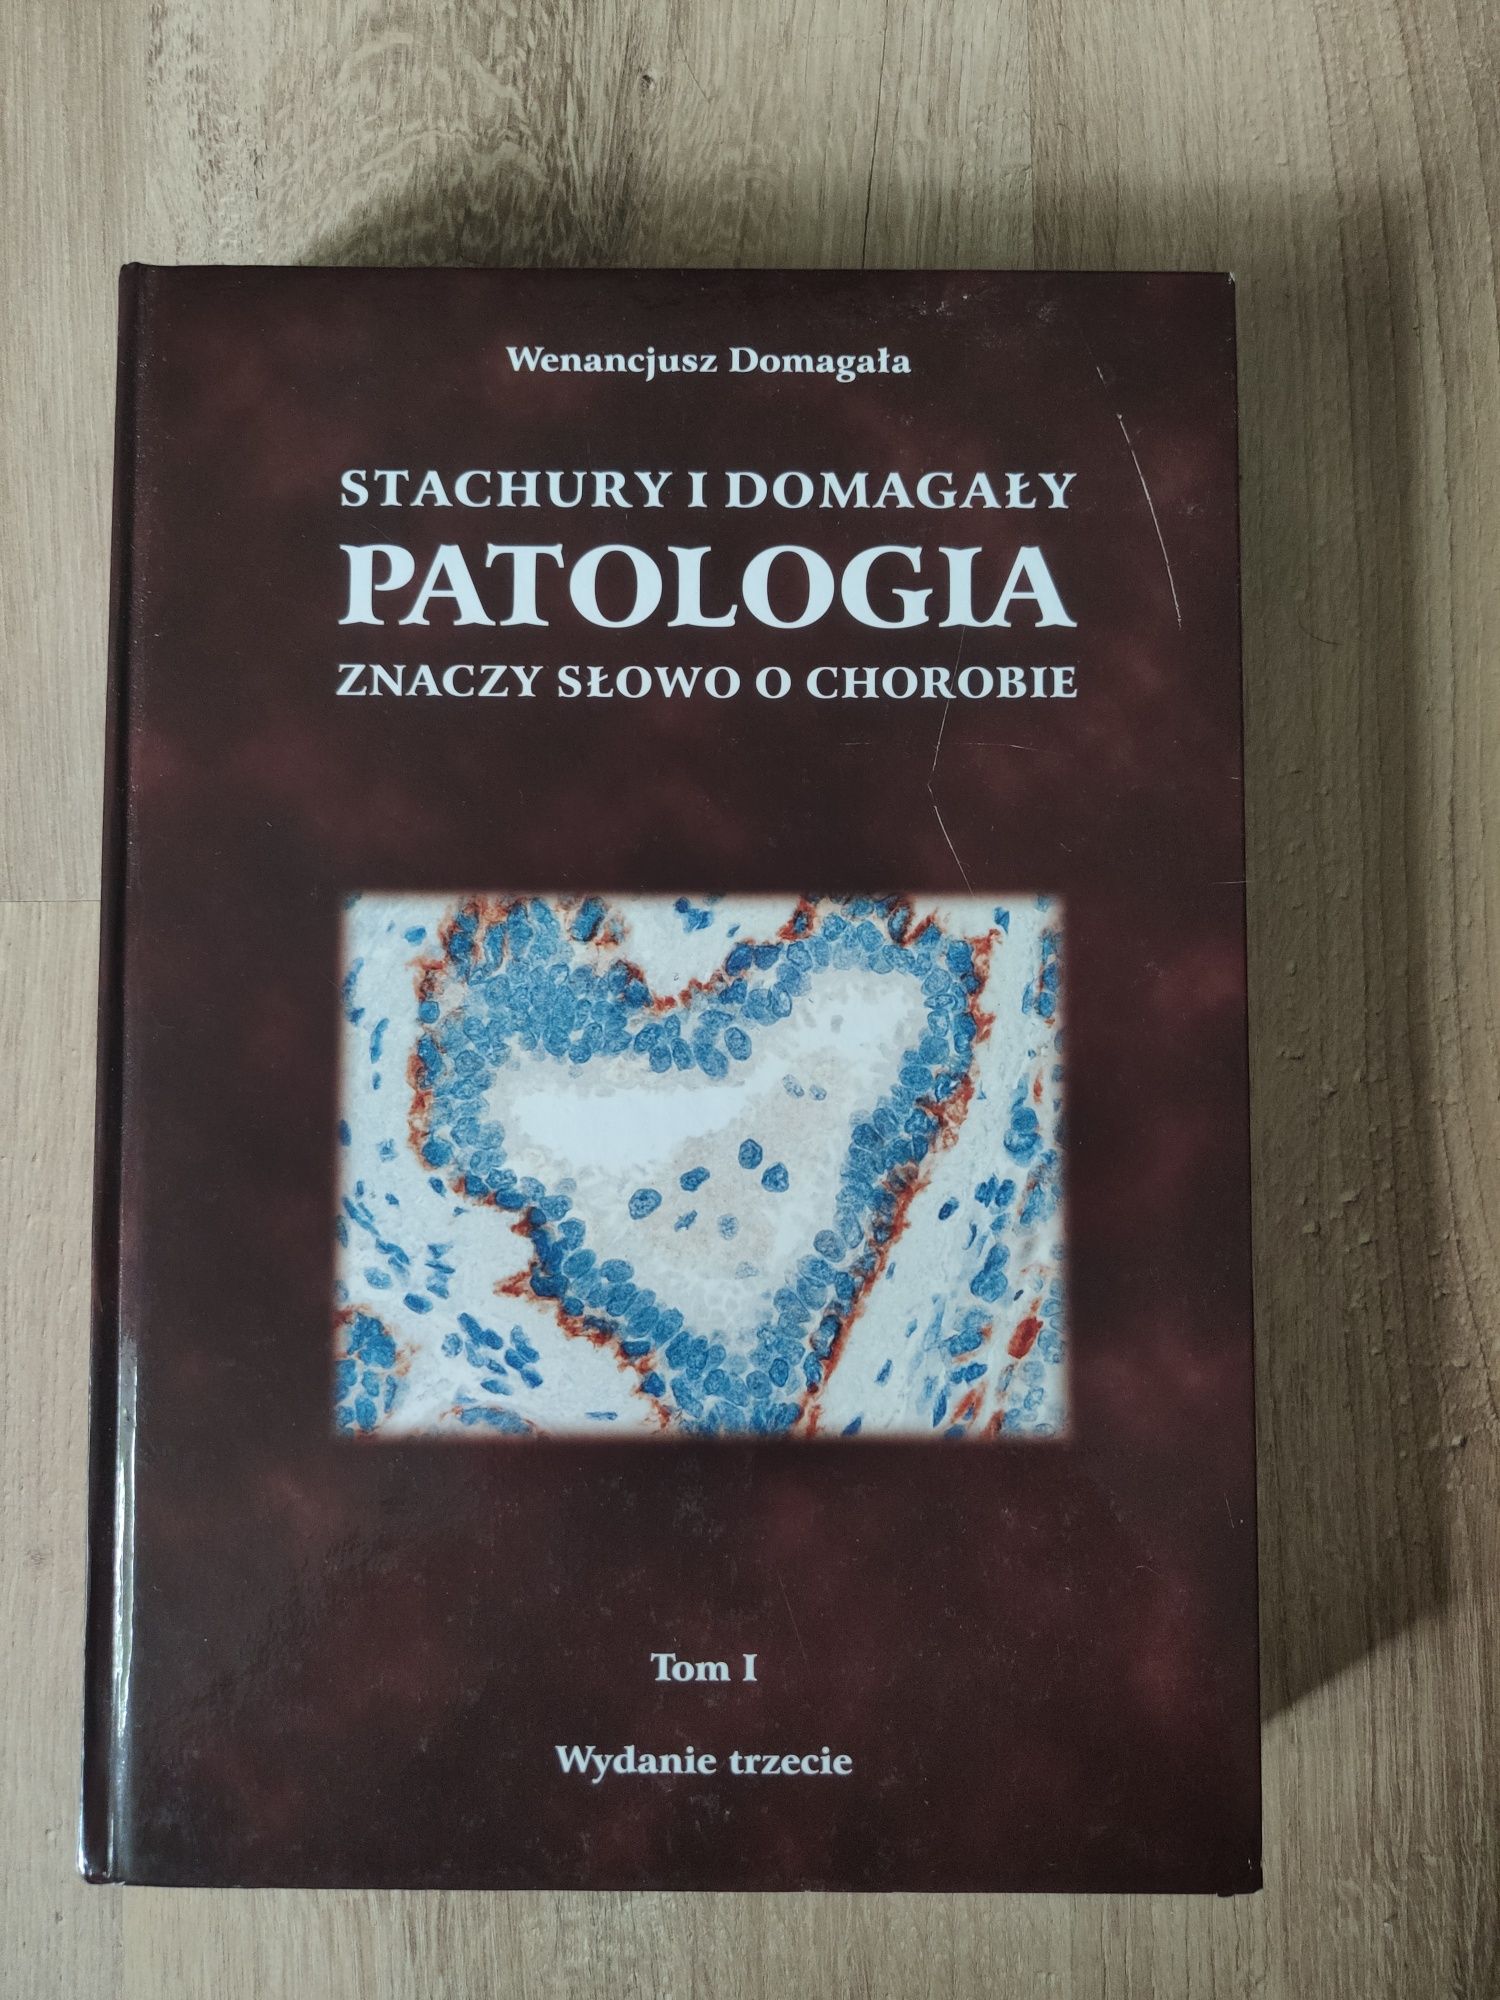 Patologia Stachura Domagała tom 1